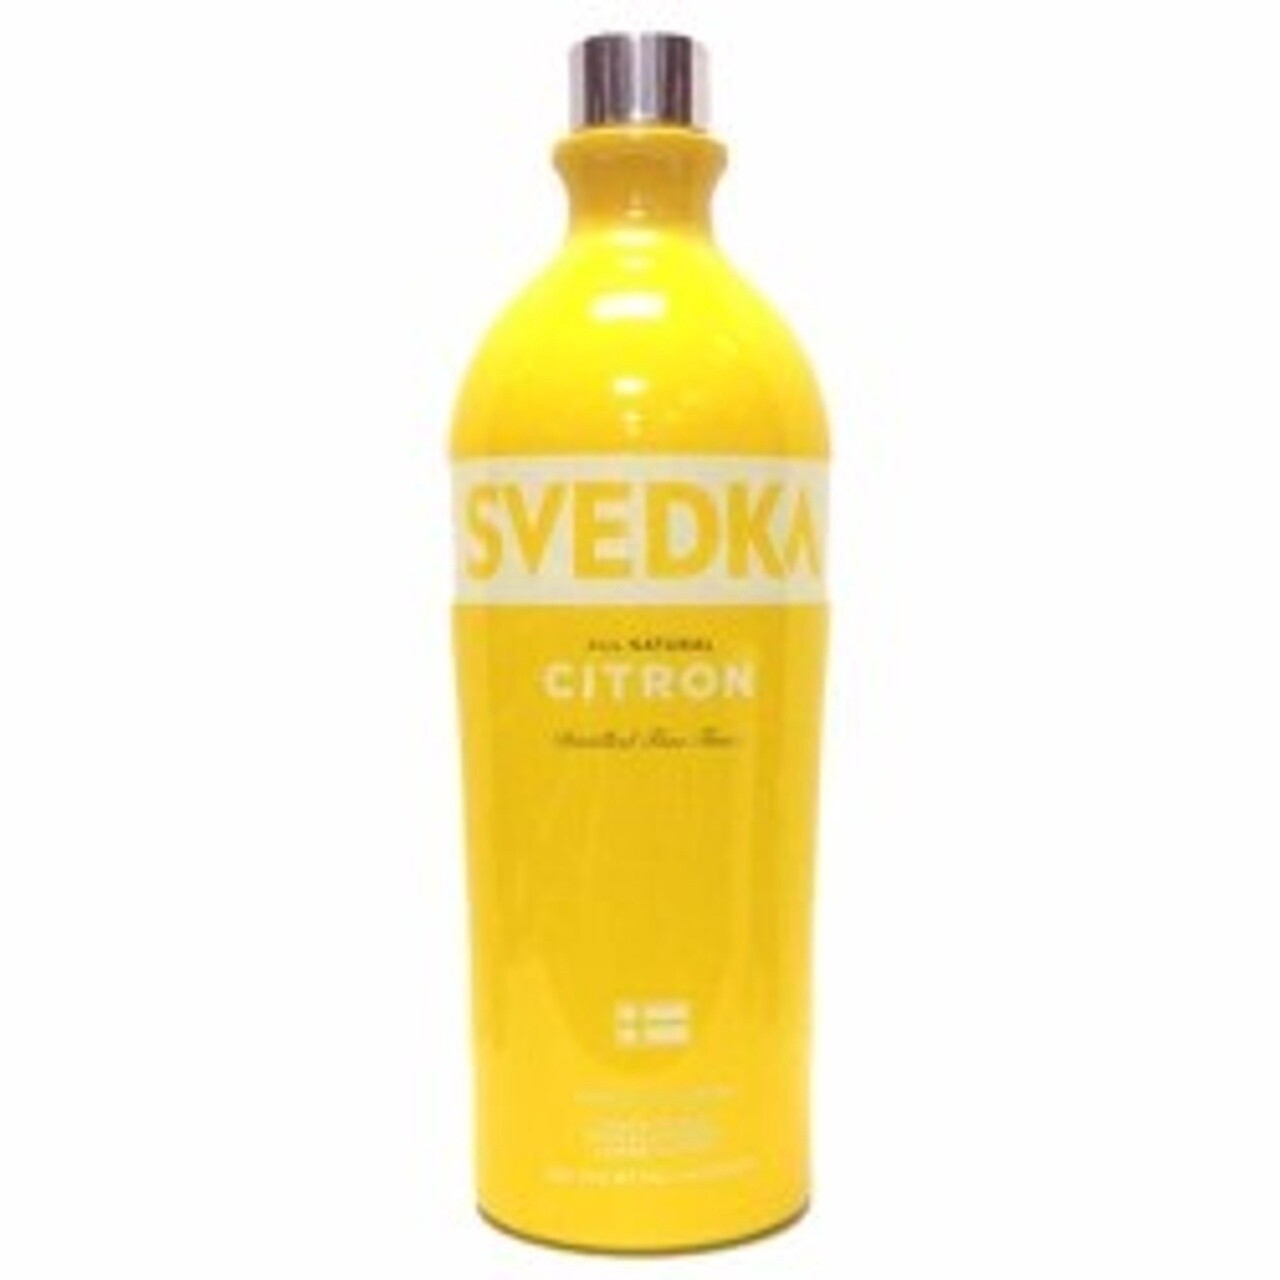 Svedka Citron (1.75L)